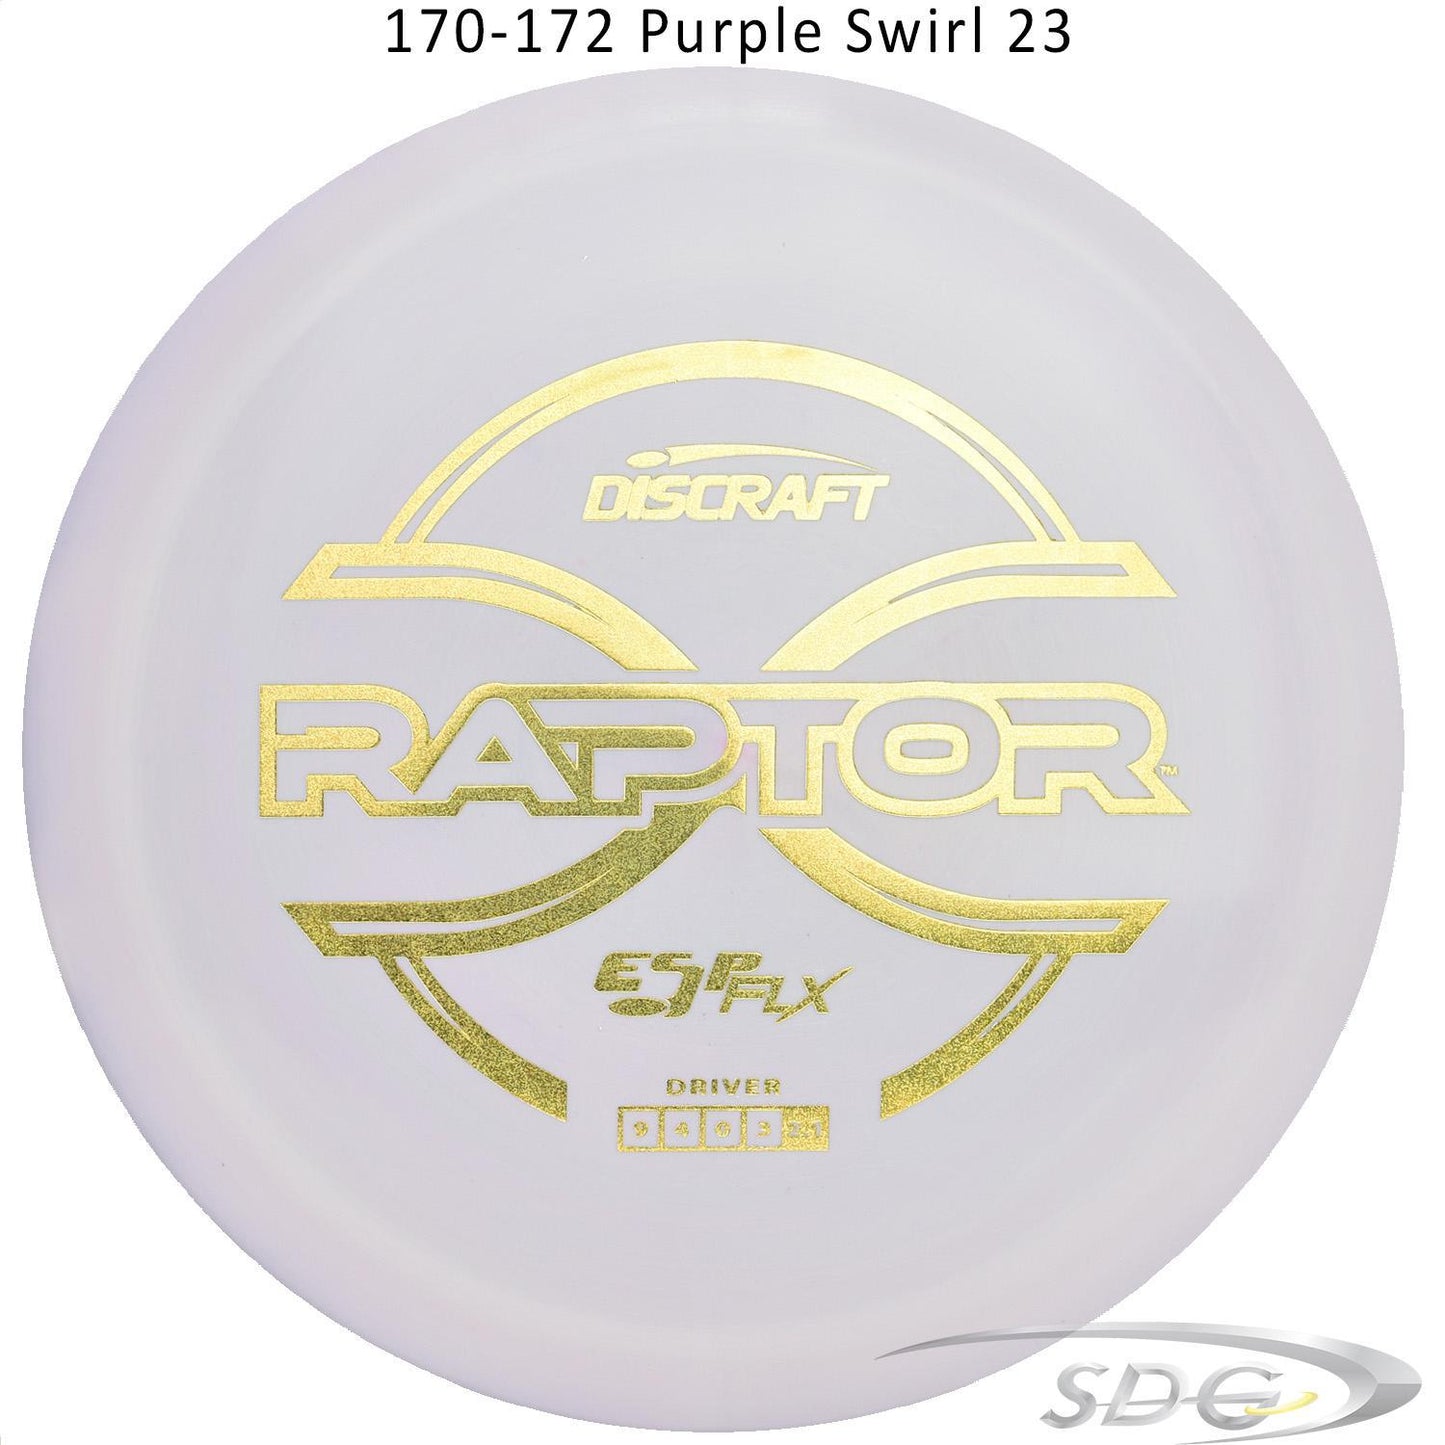 discraft-esp-flx-raptor-disc-golf-distance-driver 170-172 Purple Swirl 23